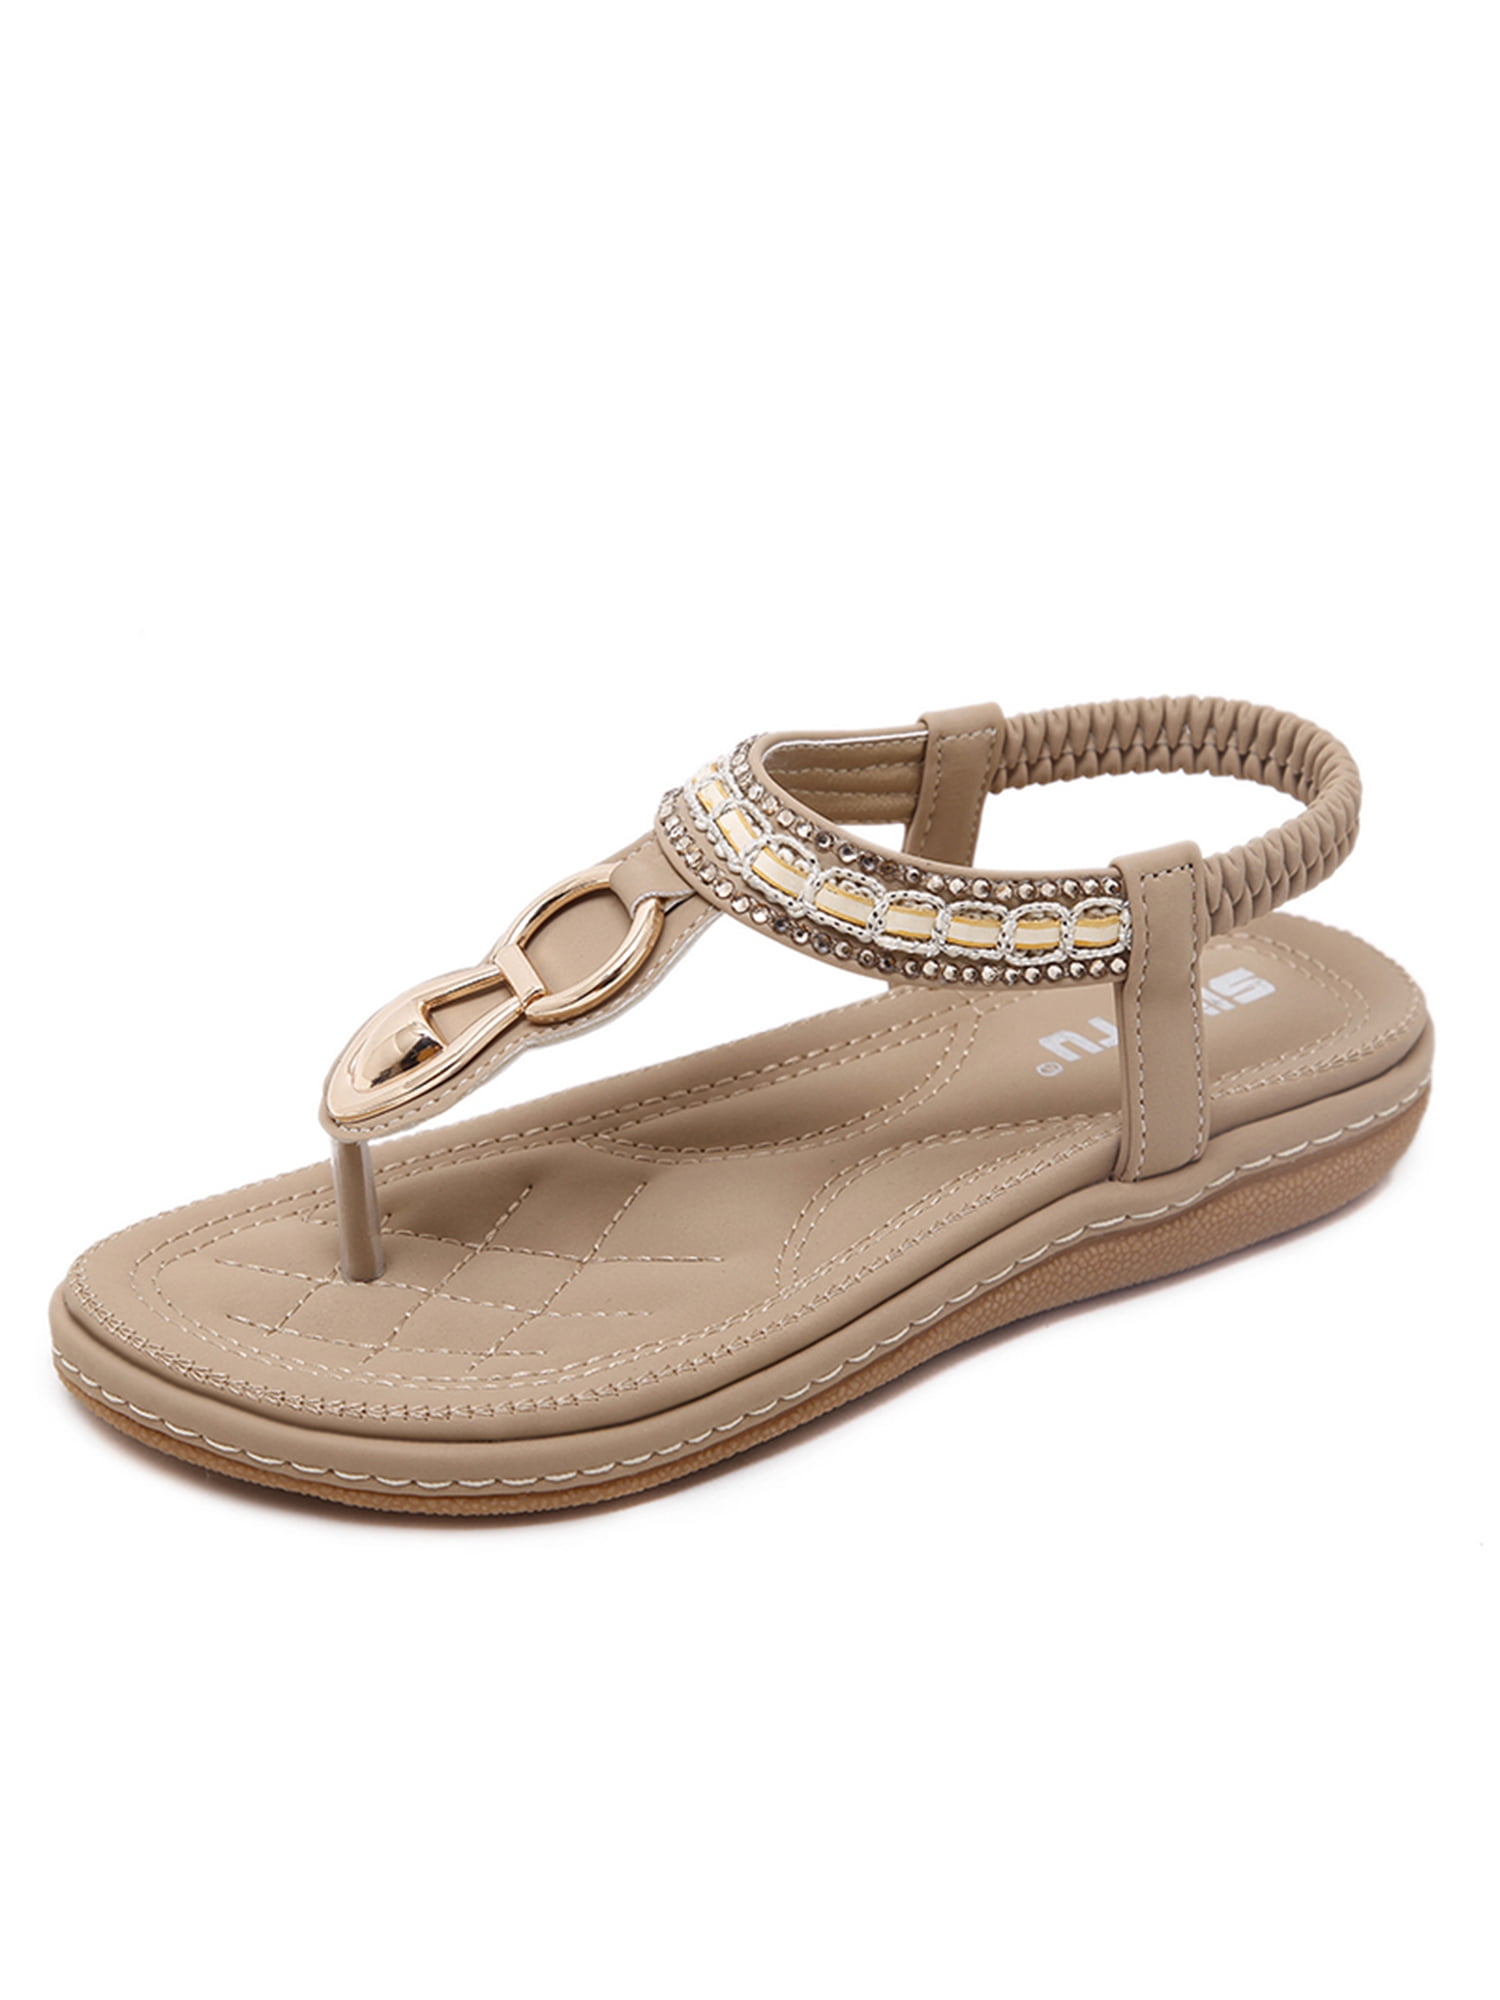 Women Bohemia Pearl Sandals Beach Party Flip Flops Casual Flats Shoes Size 5-9 